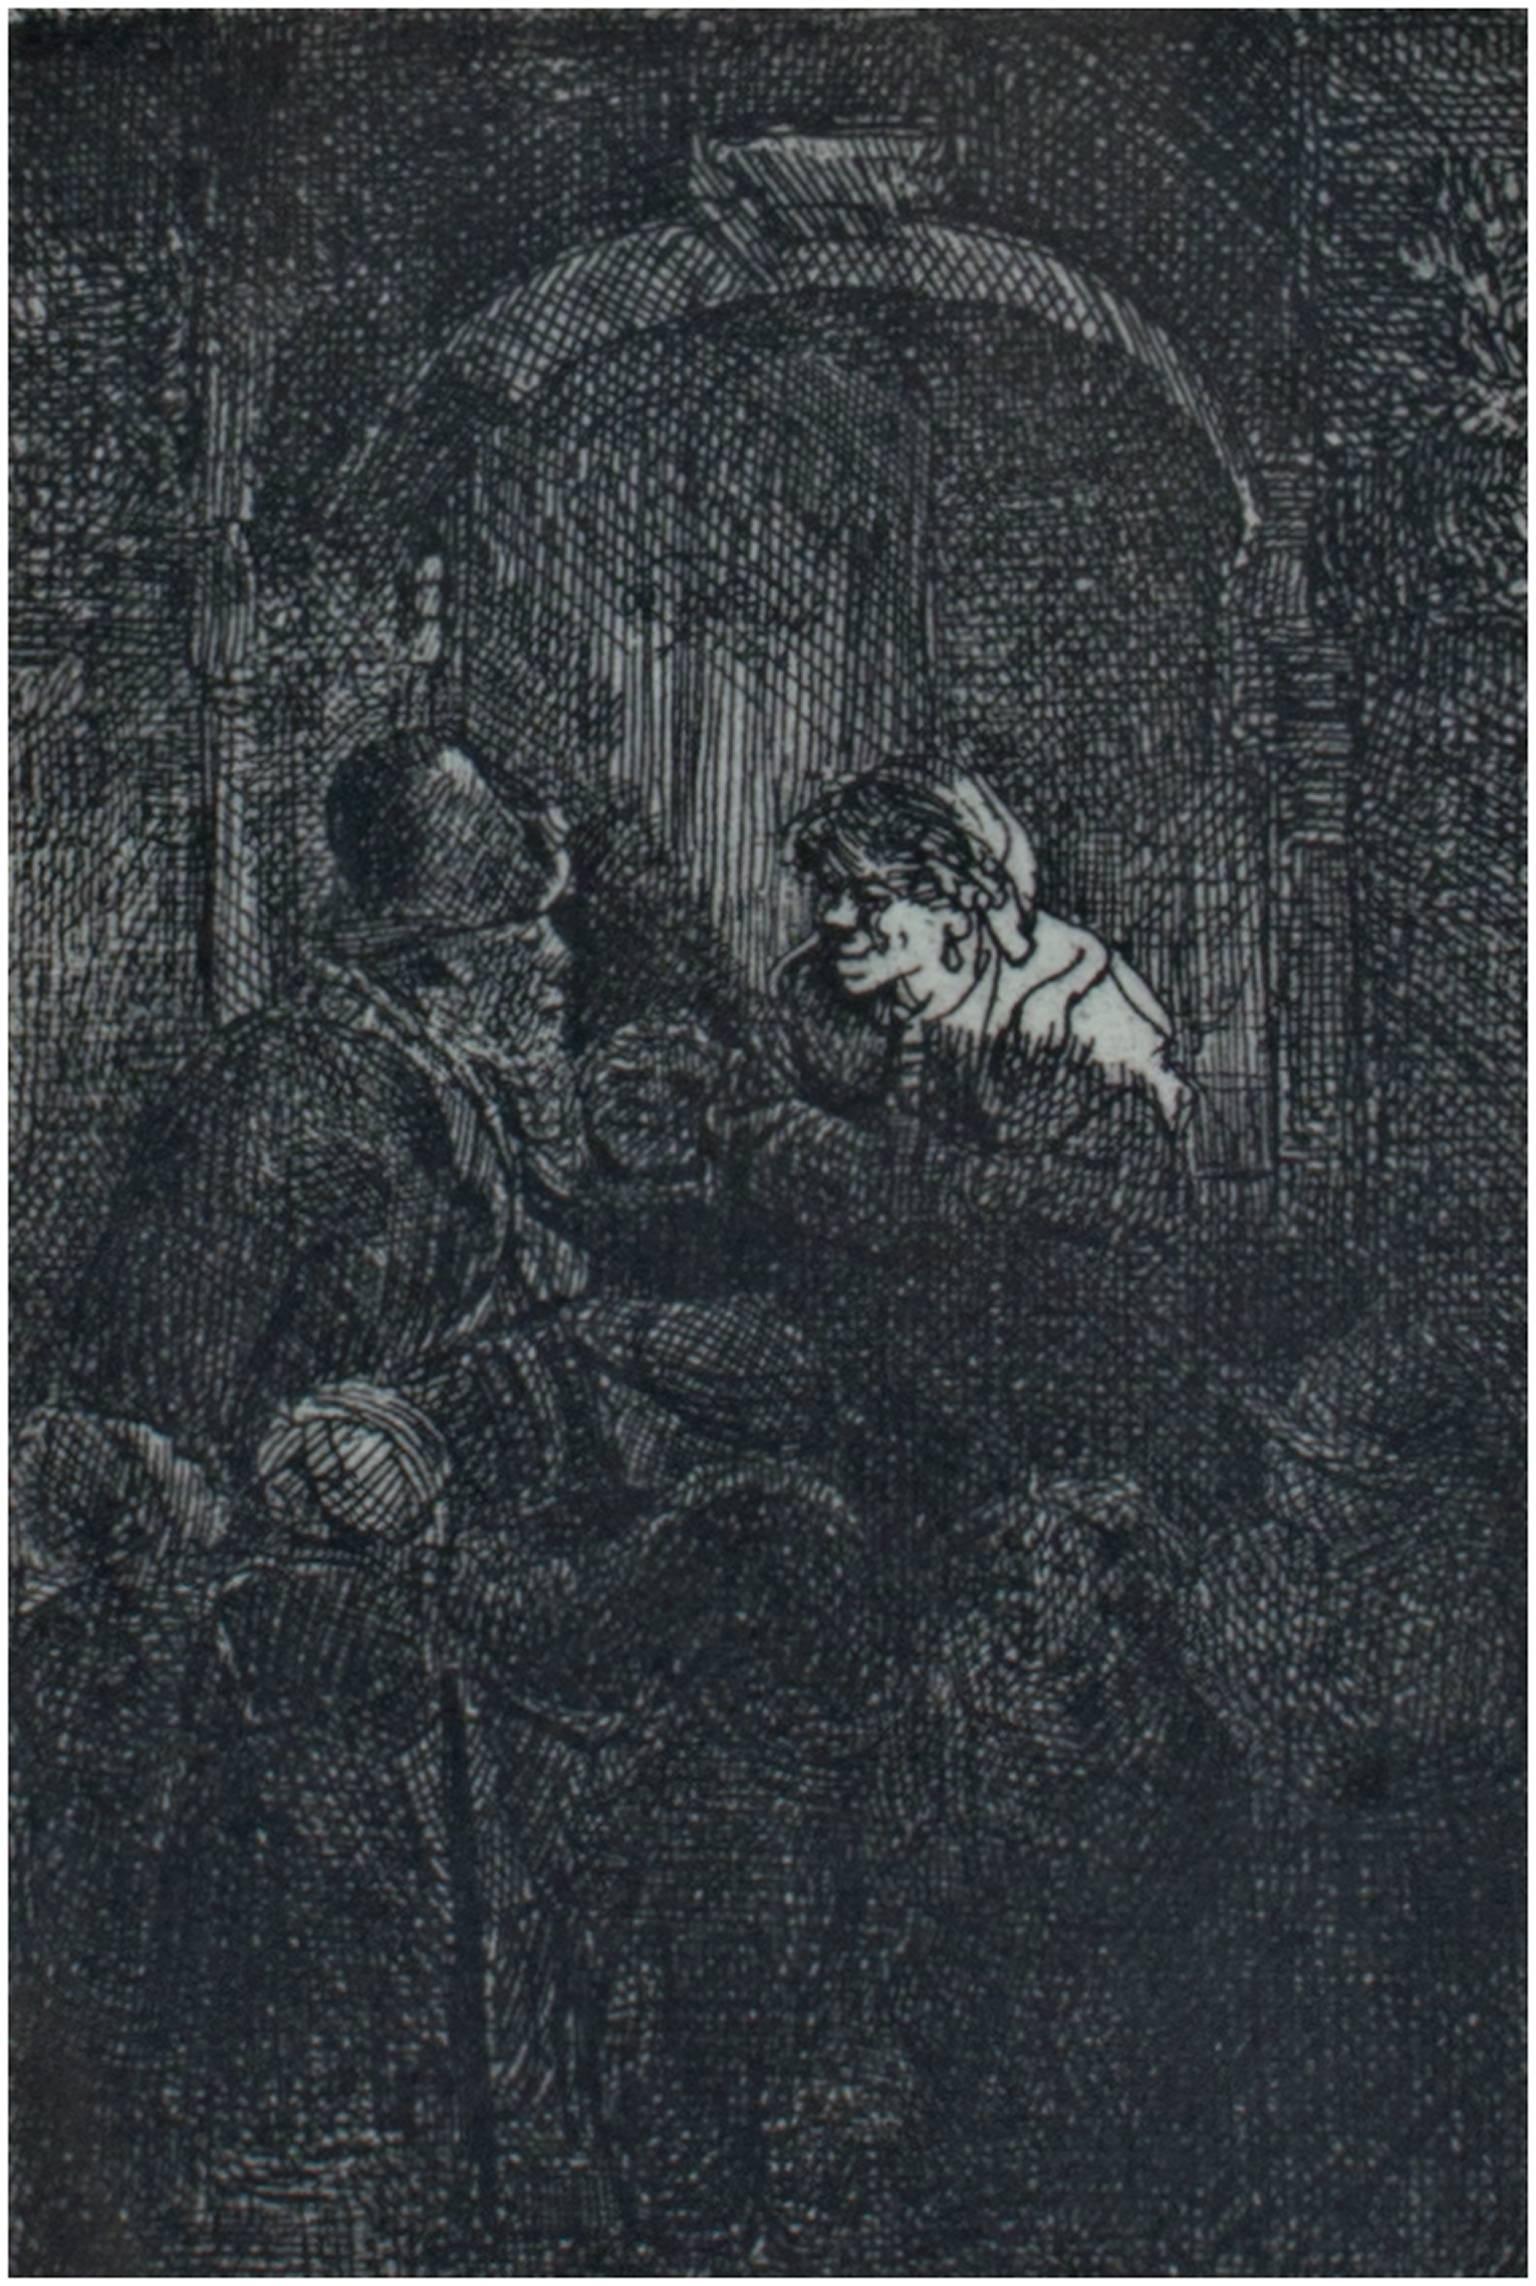 Rembrandt van Rijn Figurative Print - Woman at a Door Hatch Talking to a Man and Children (The Schoolmaster)